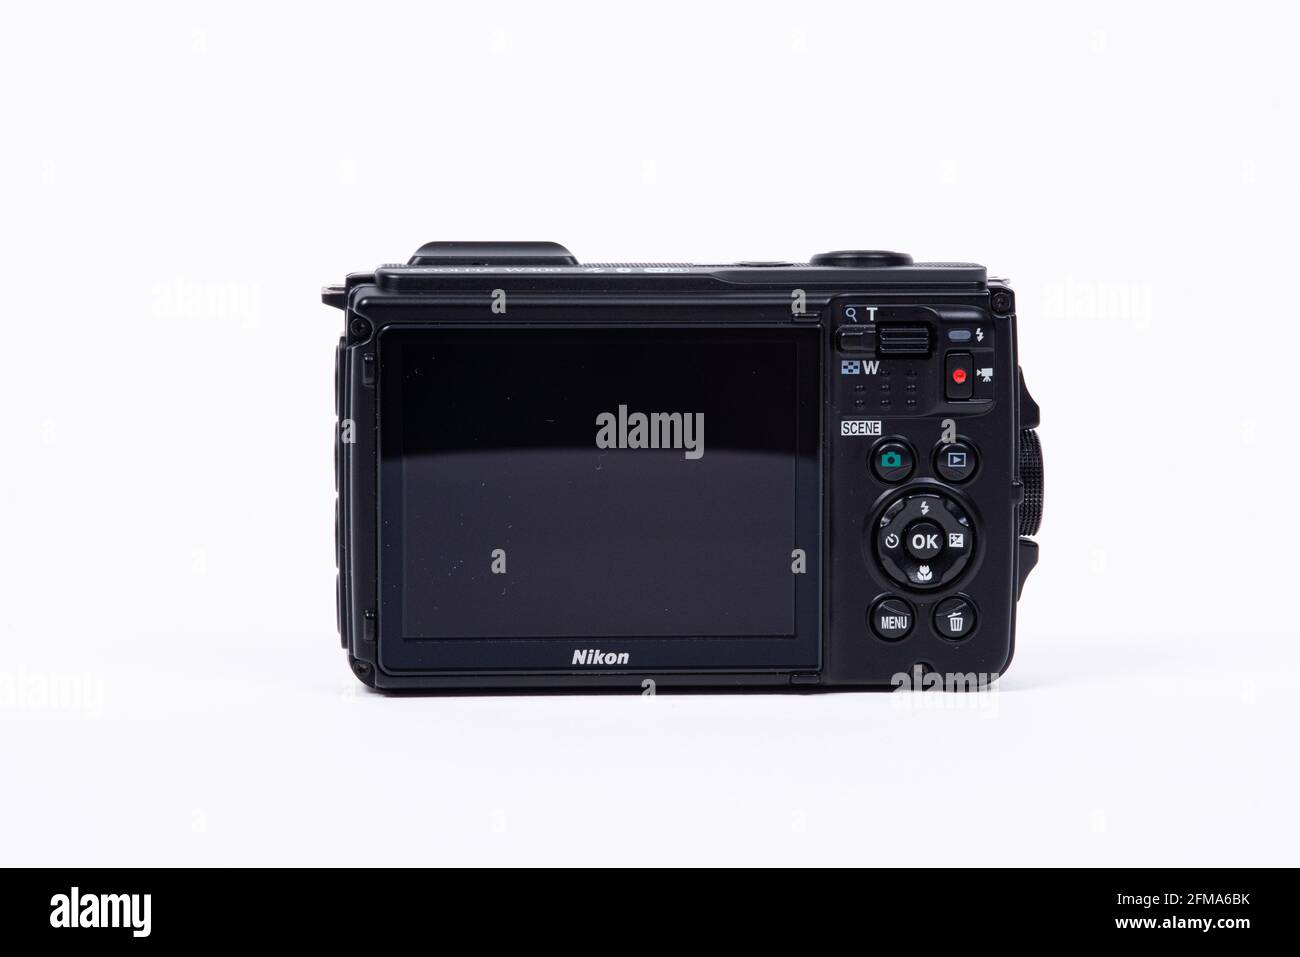 Nikon camera sport hi-res stock photography and images - Alamy